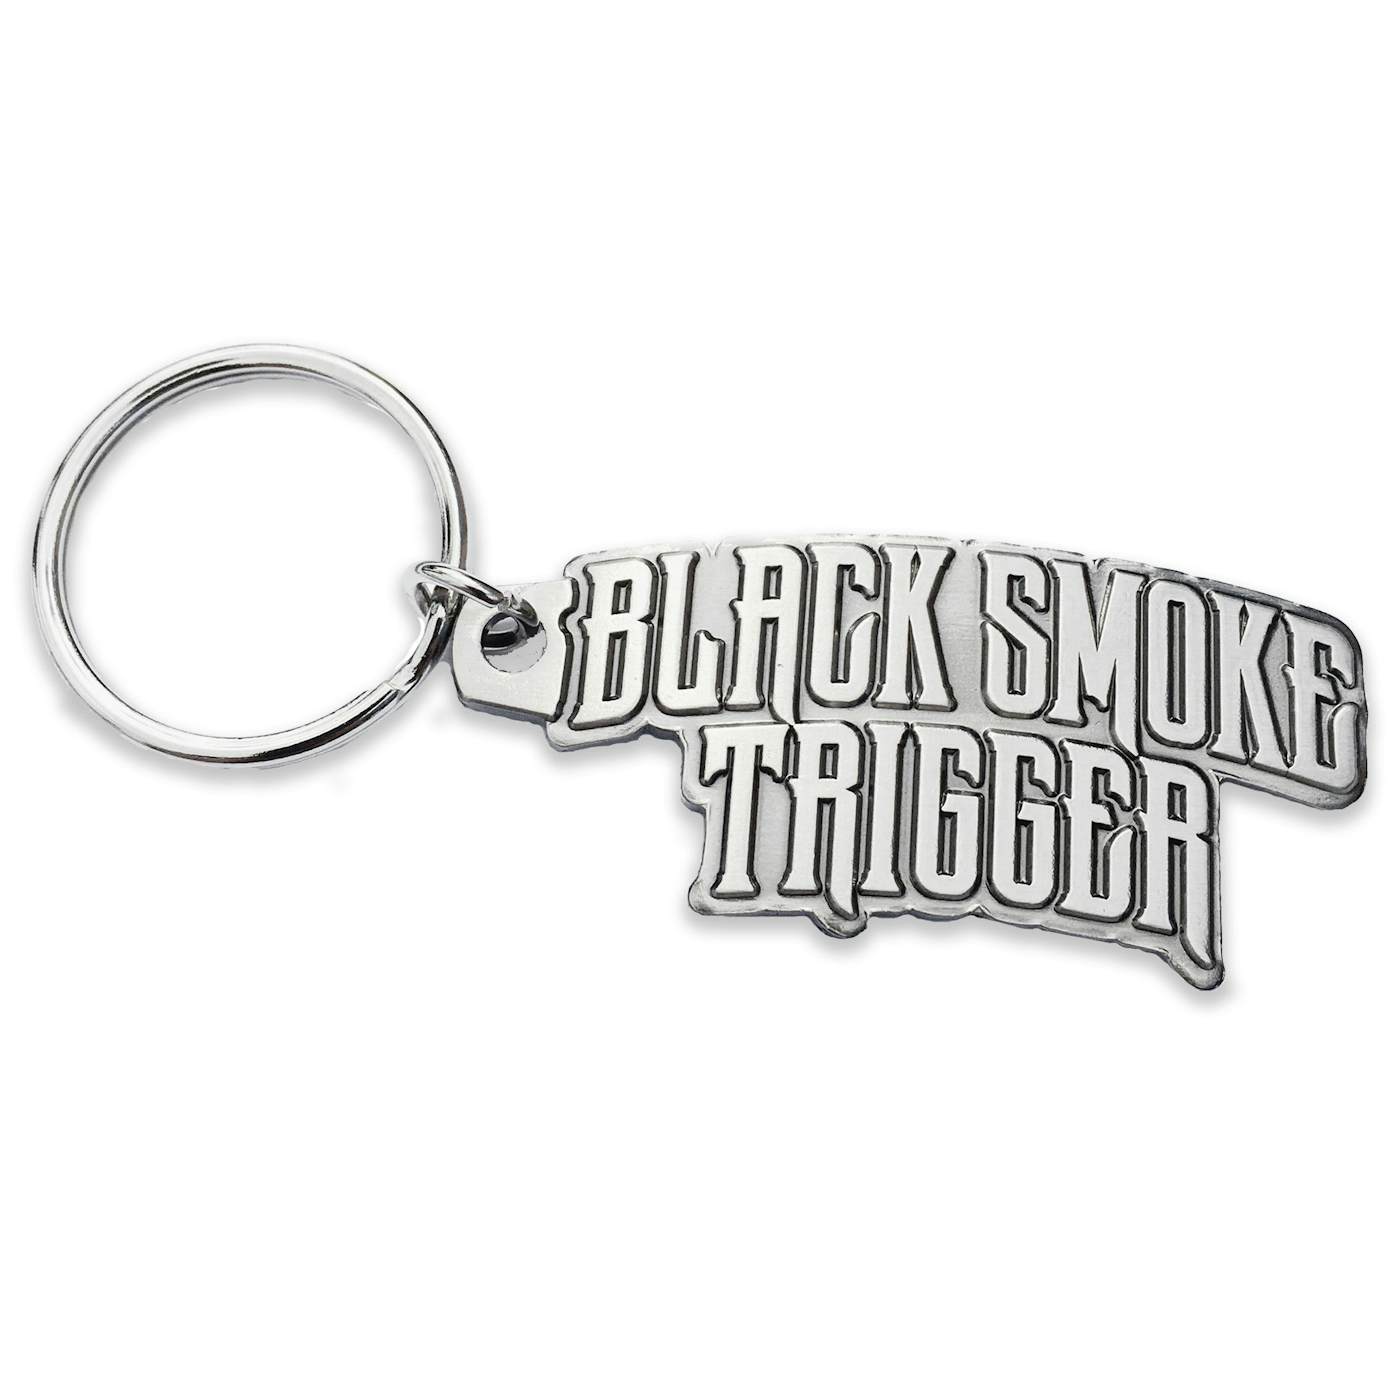 Black Smoke Trigger BST Logo Metal Keychain